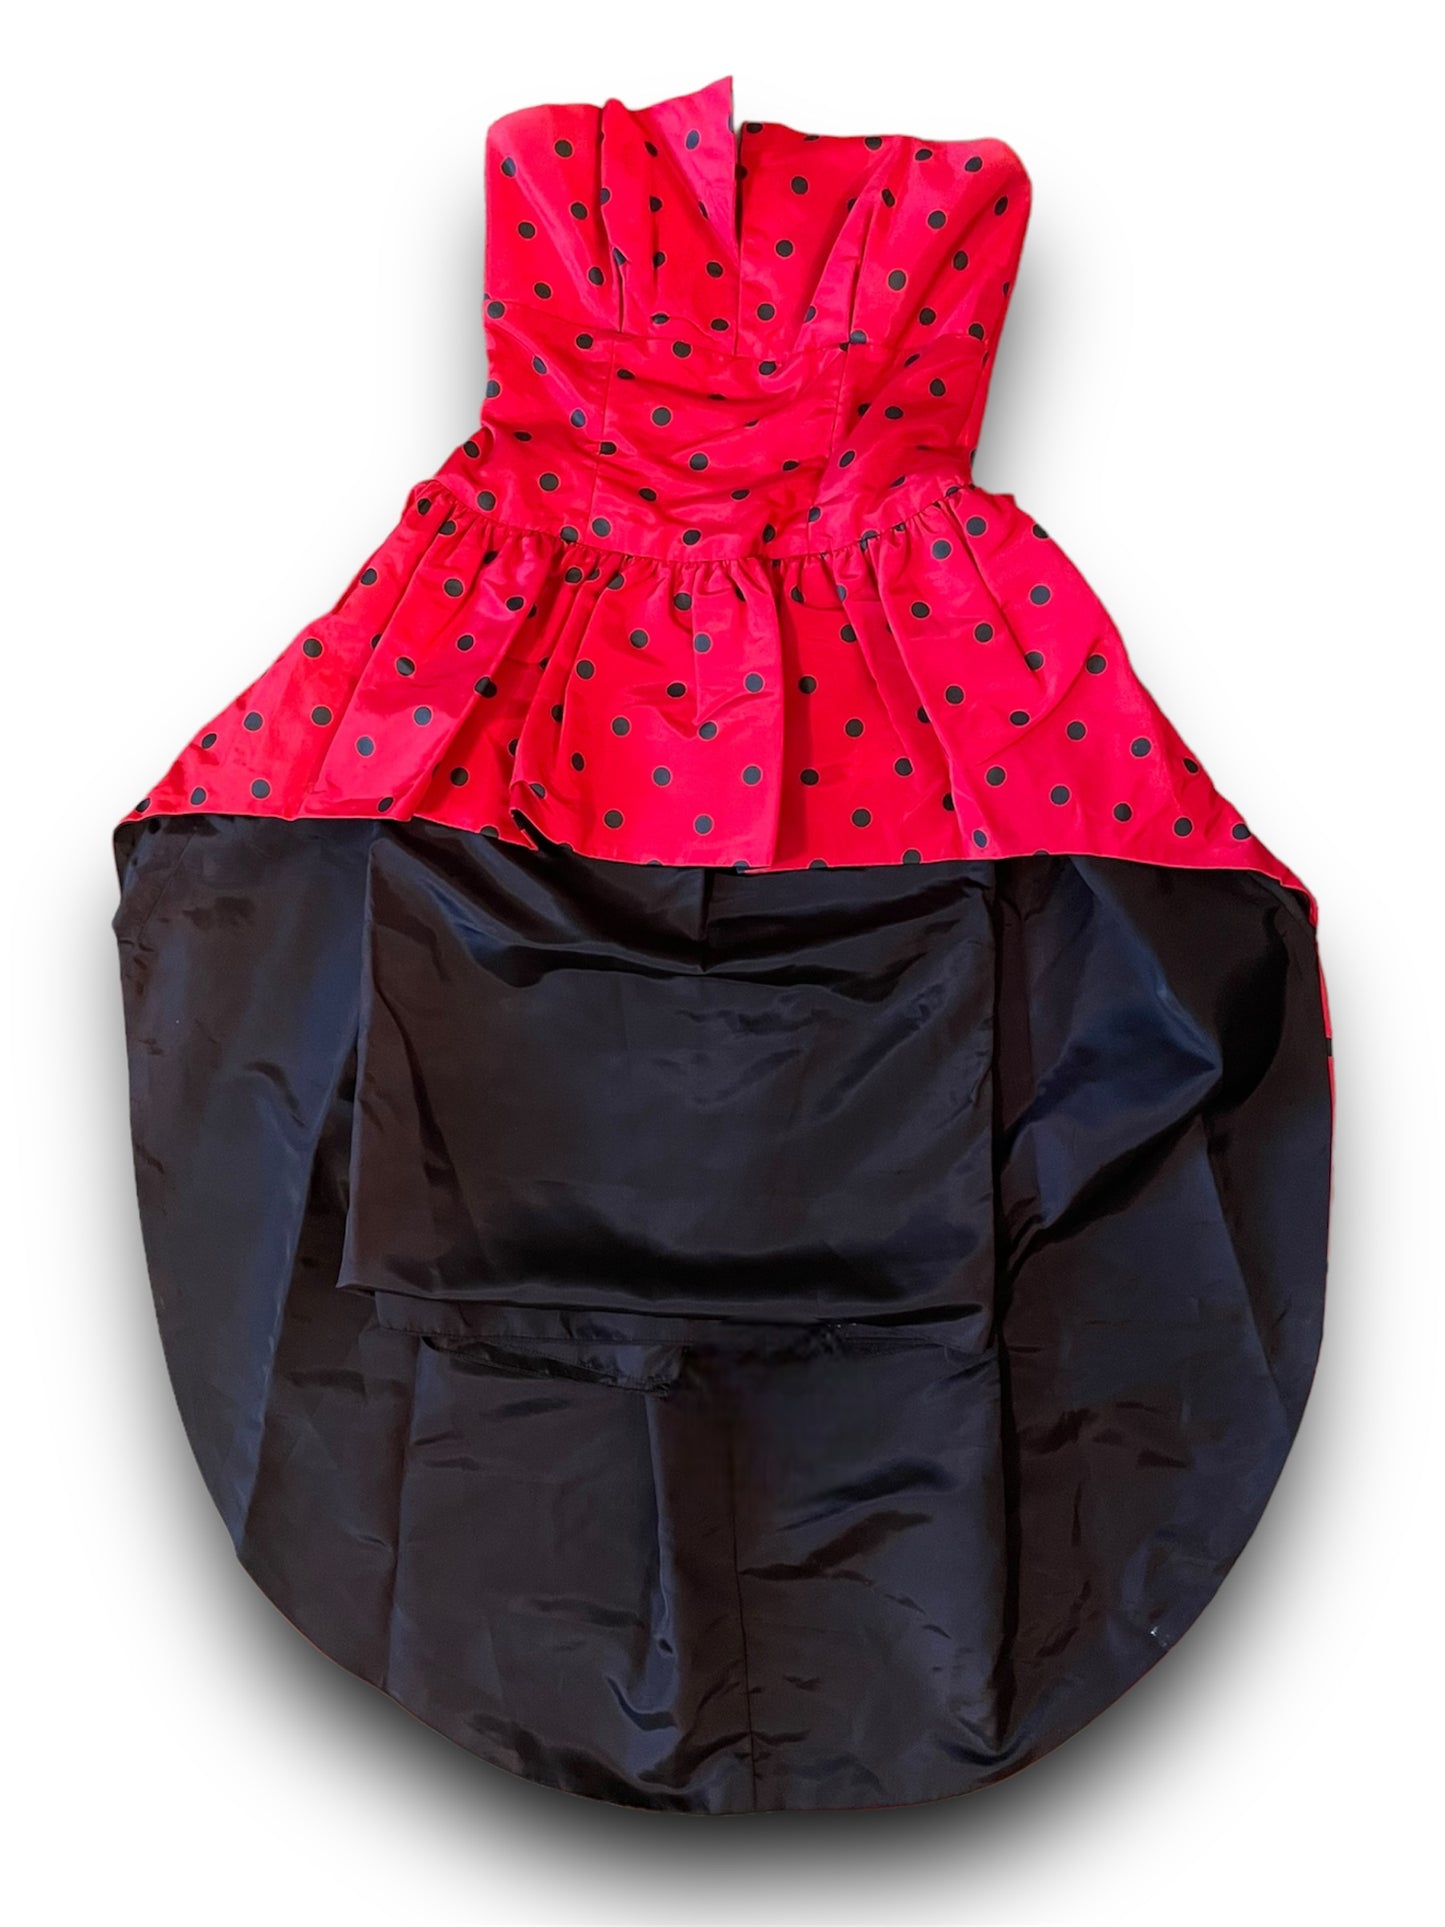 Vintage 1980s Red & Black Polka dot strapless high low peplum pencil skirt big bow on back